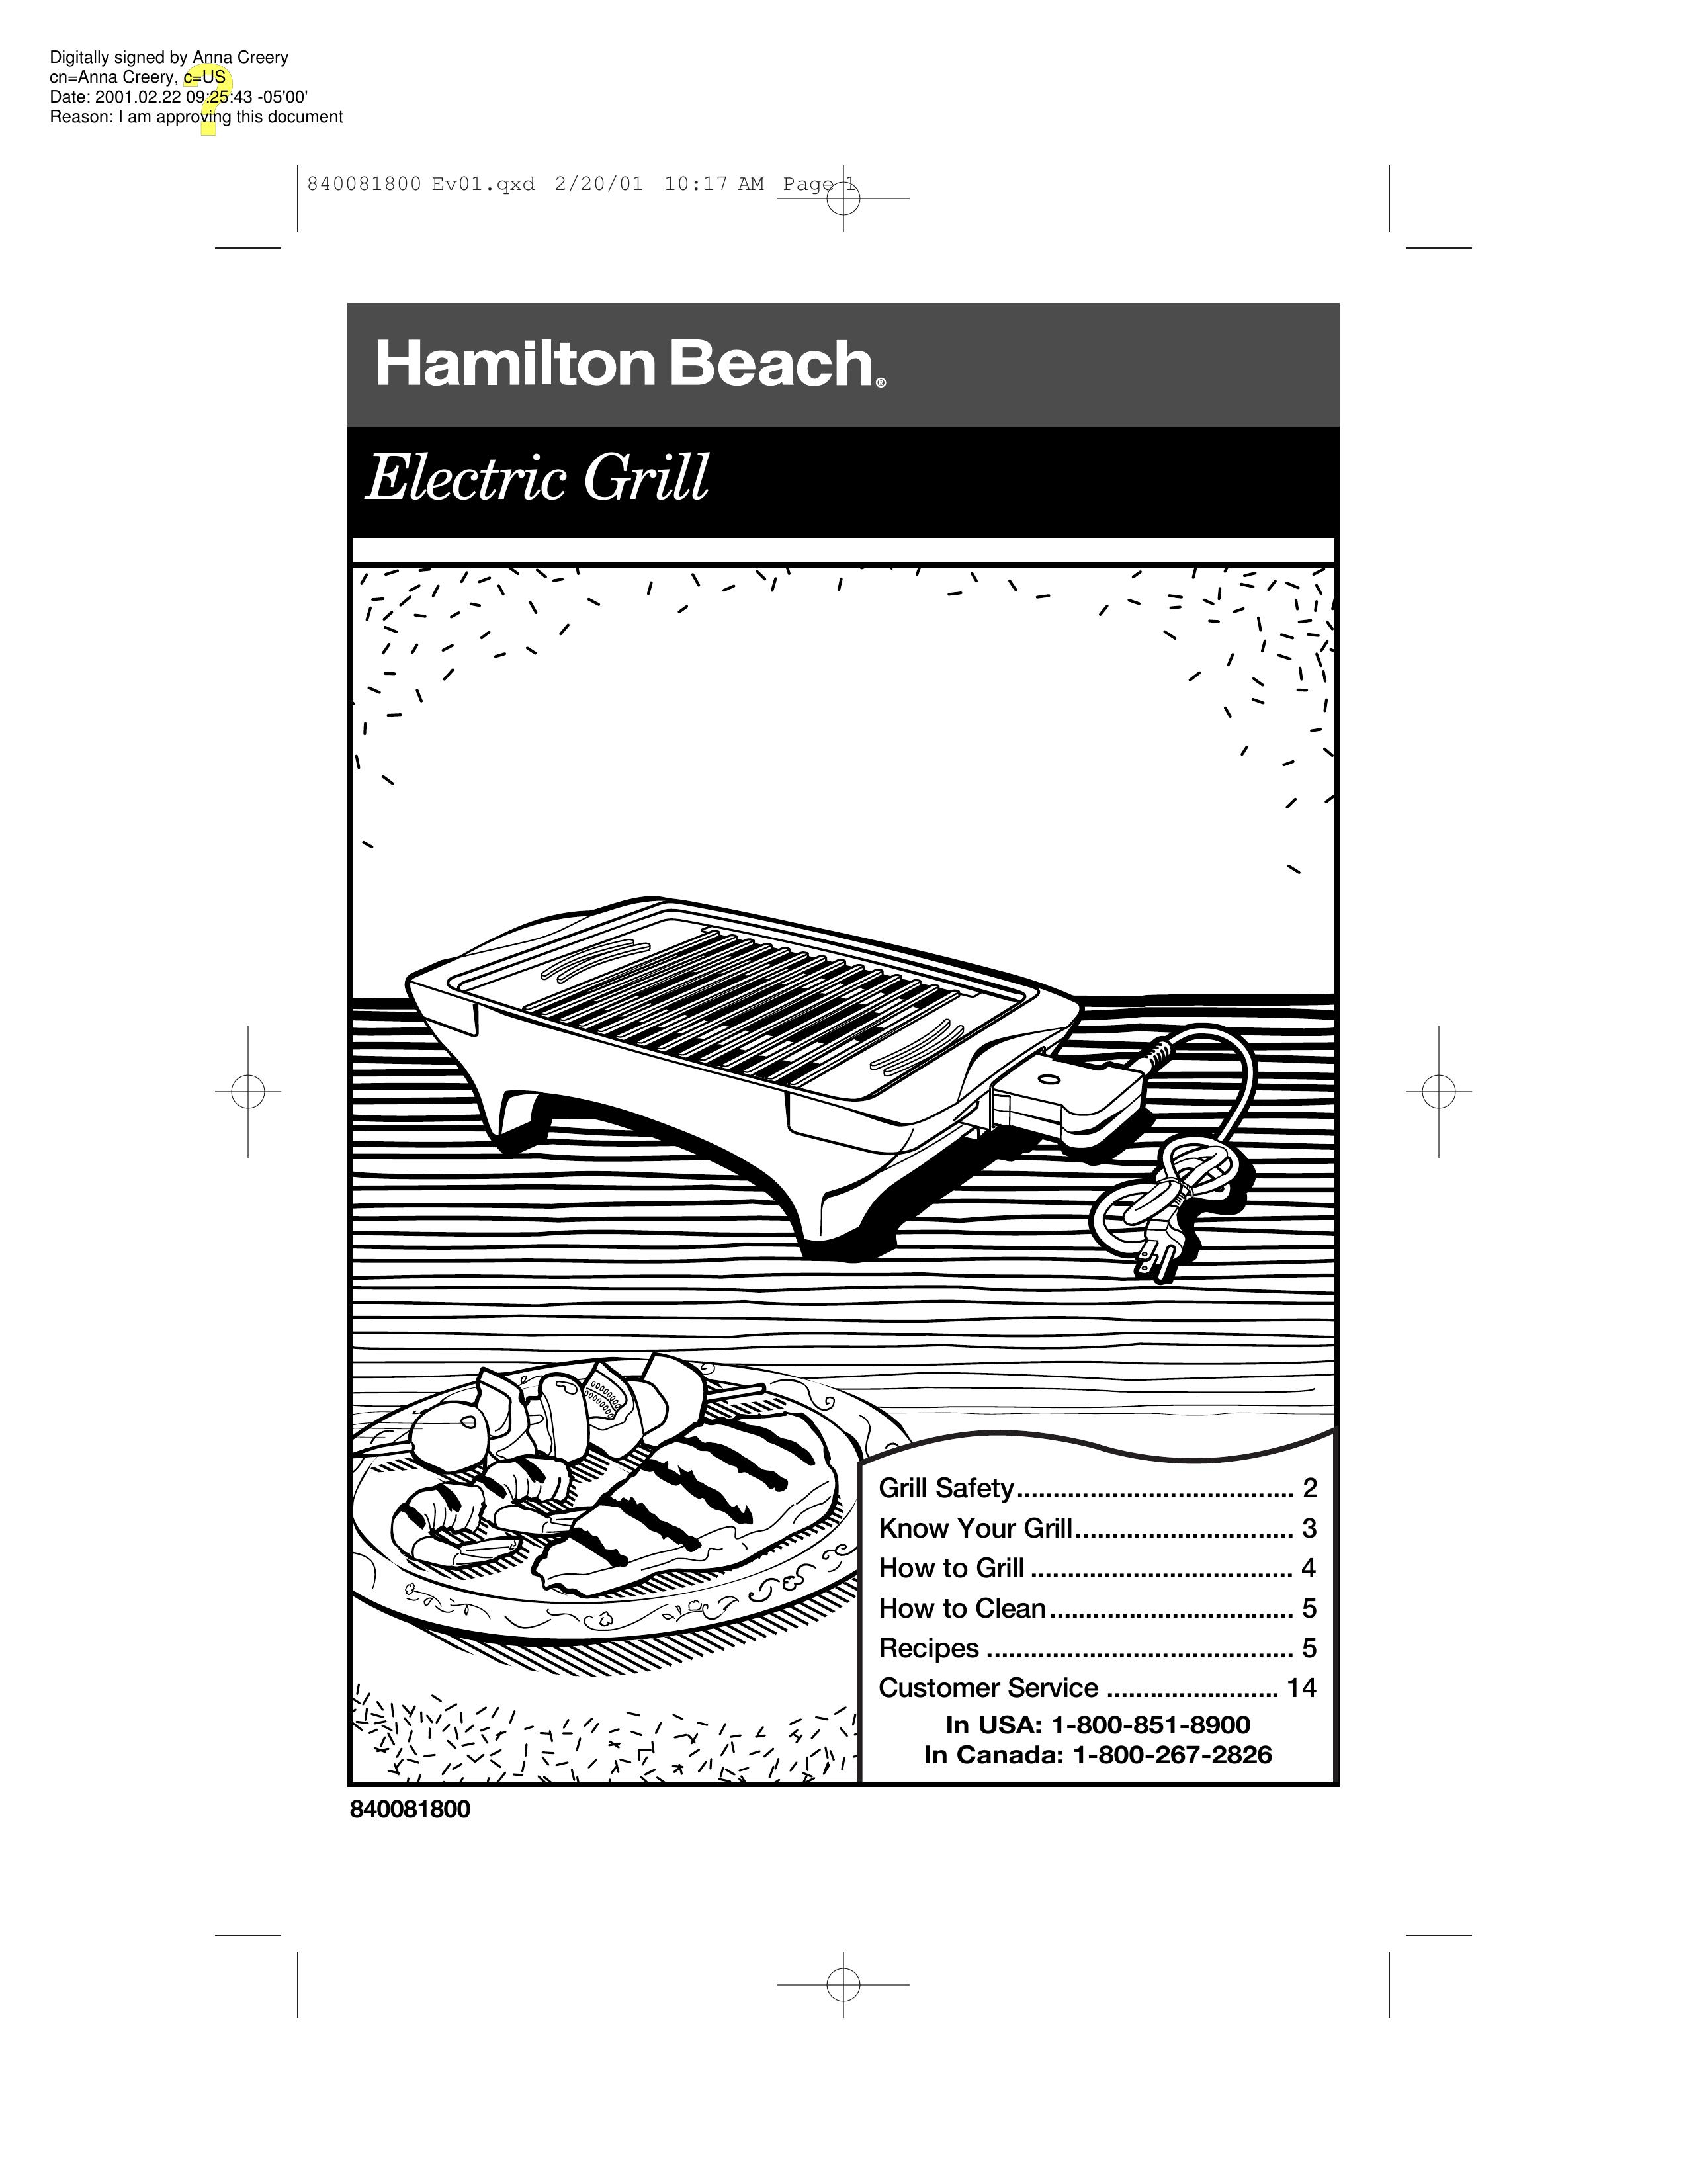 Hamilton Beach 840081800 Electric Grill User Manual